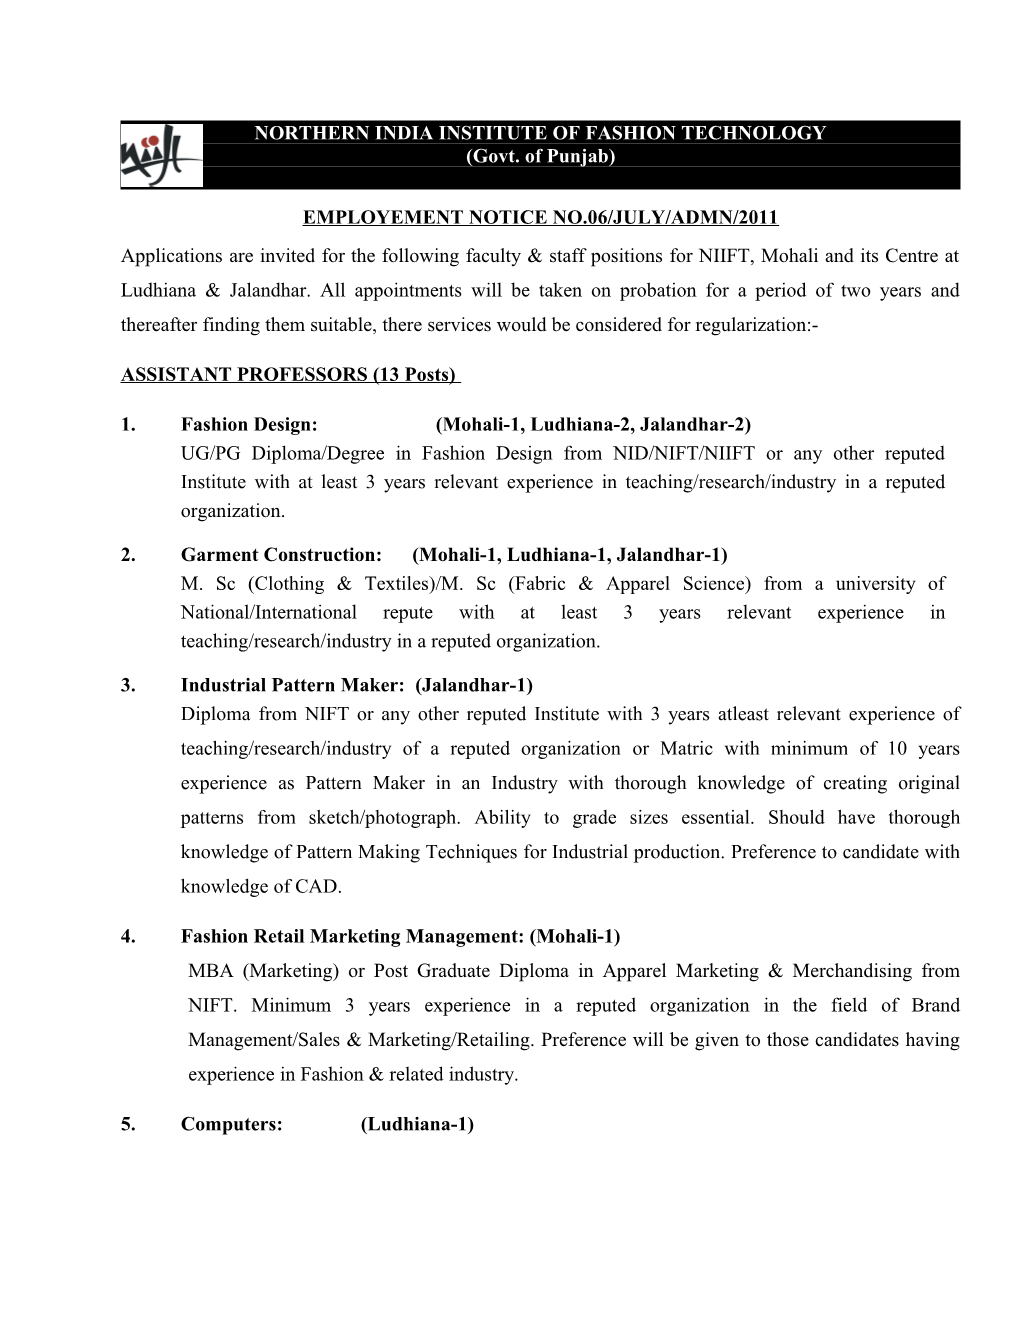 Employement Notice No.06/July/Admn/2011